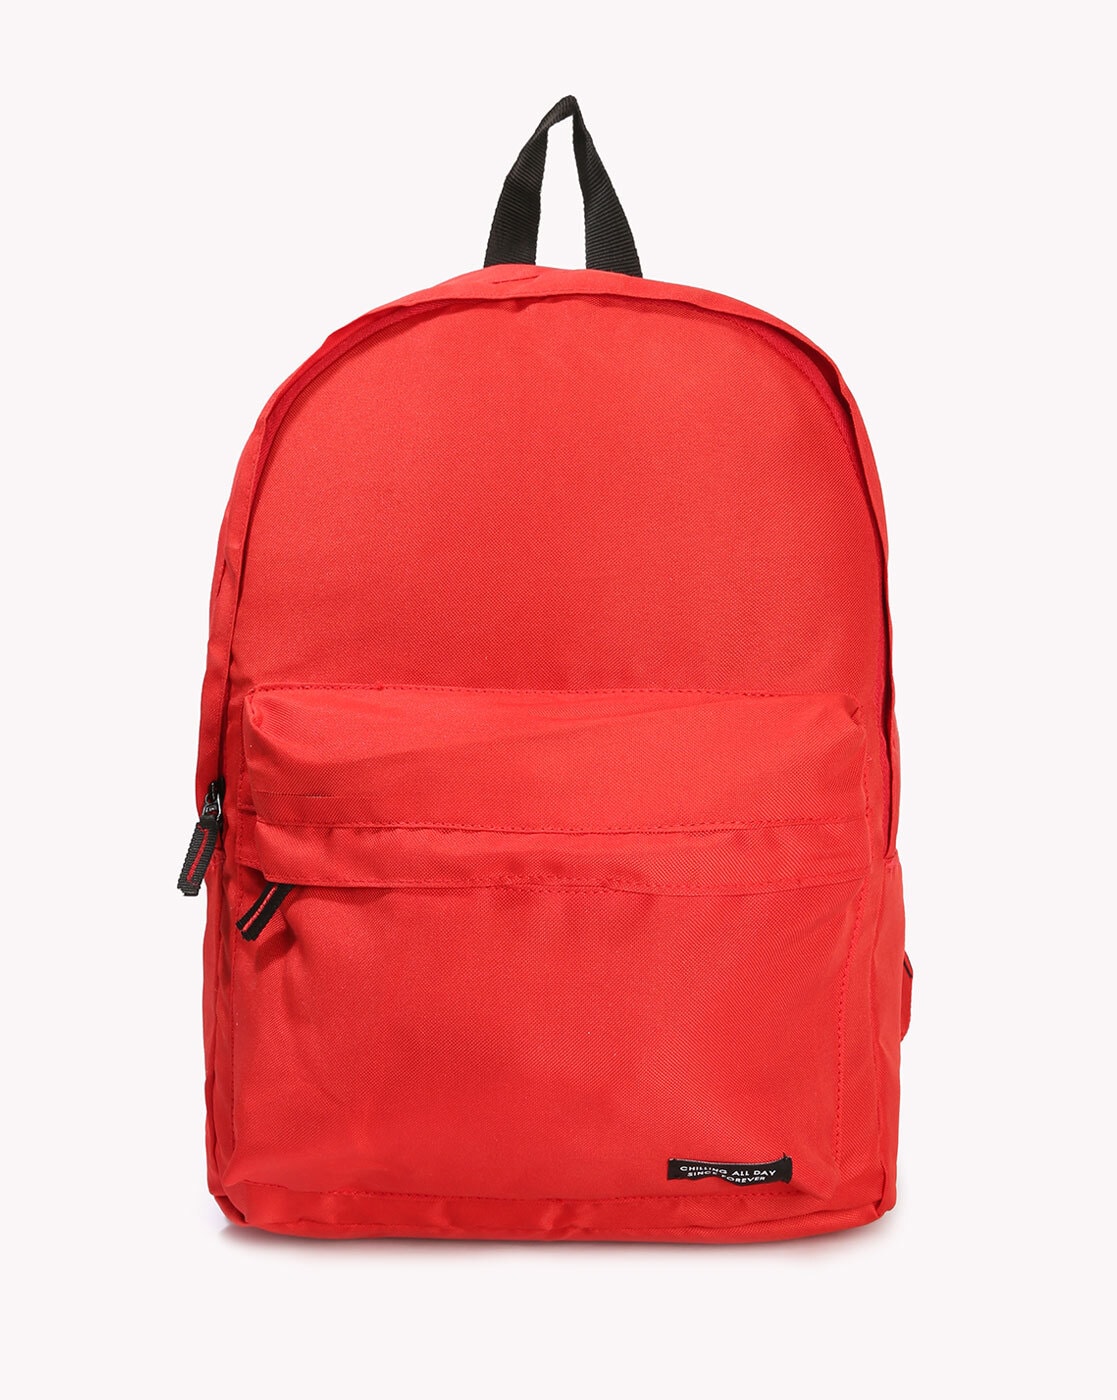 Michael Kors Red Leather Backpack 2024 | towncentervb.com